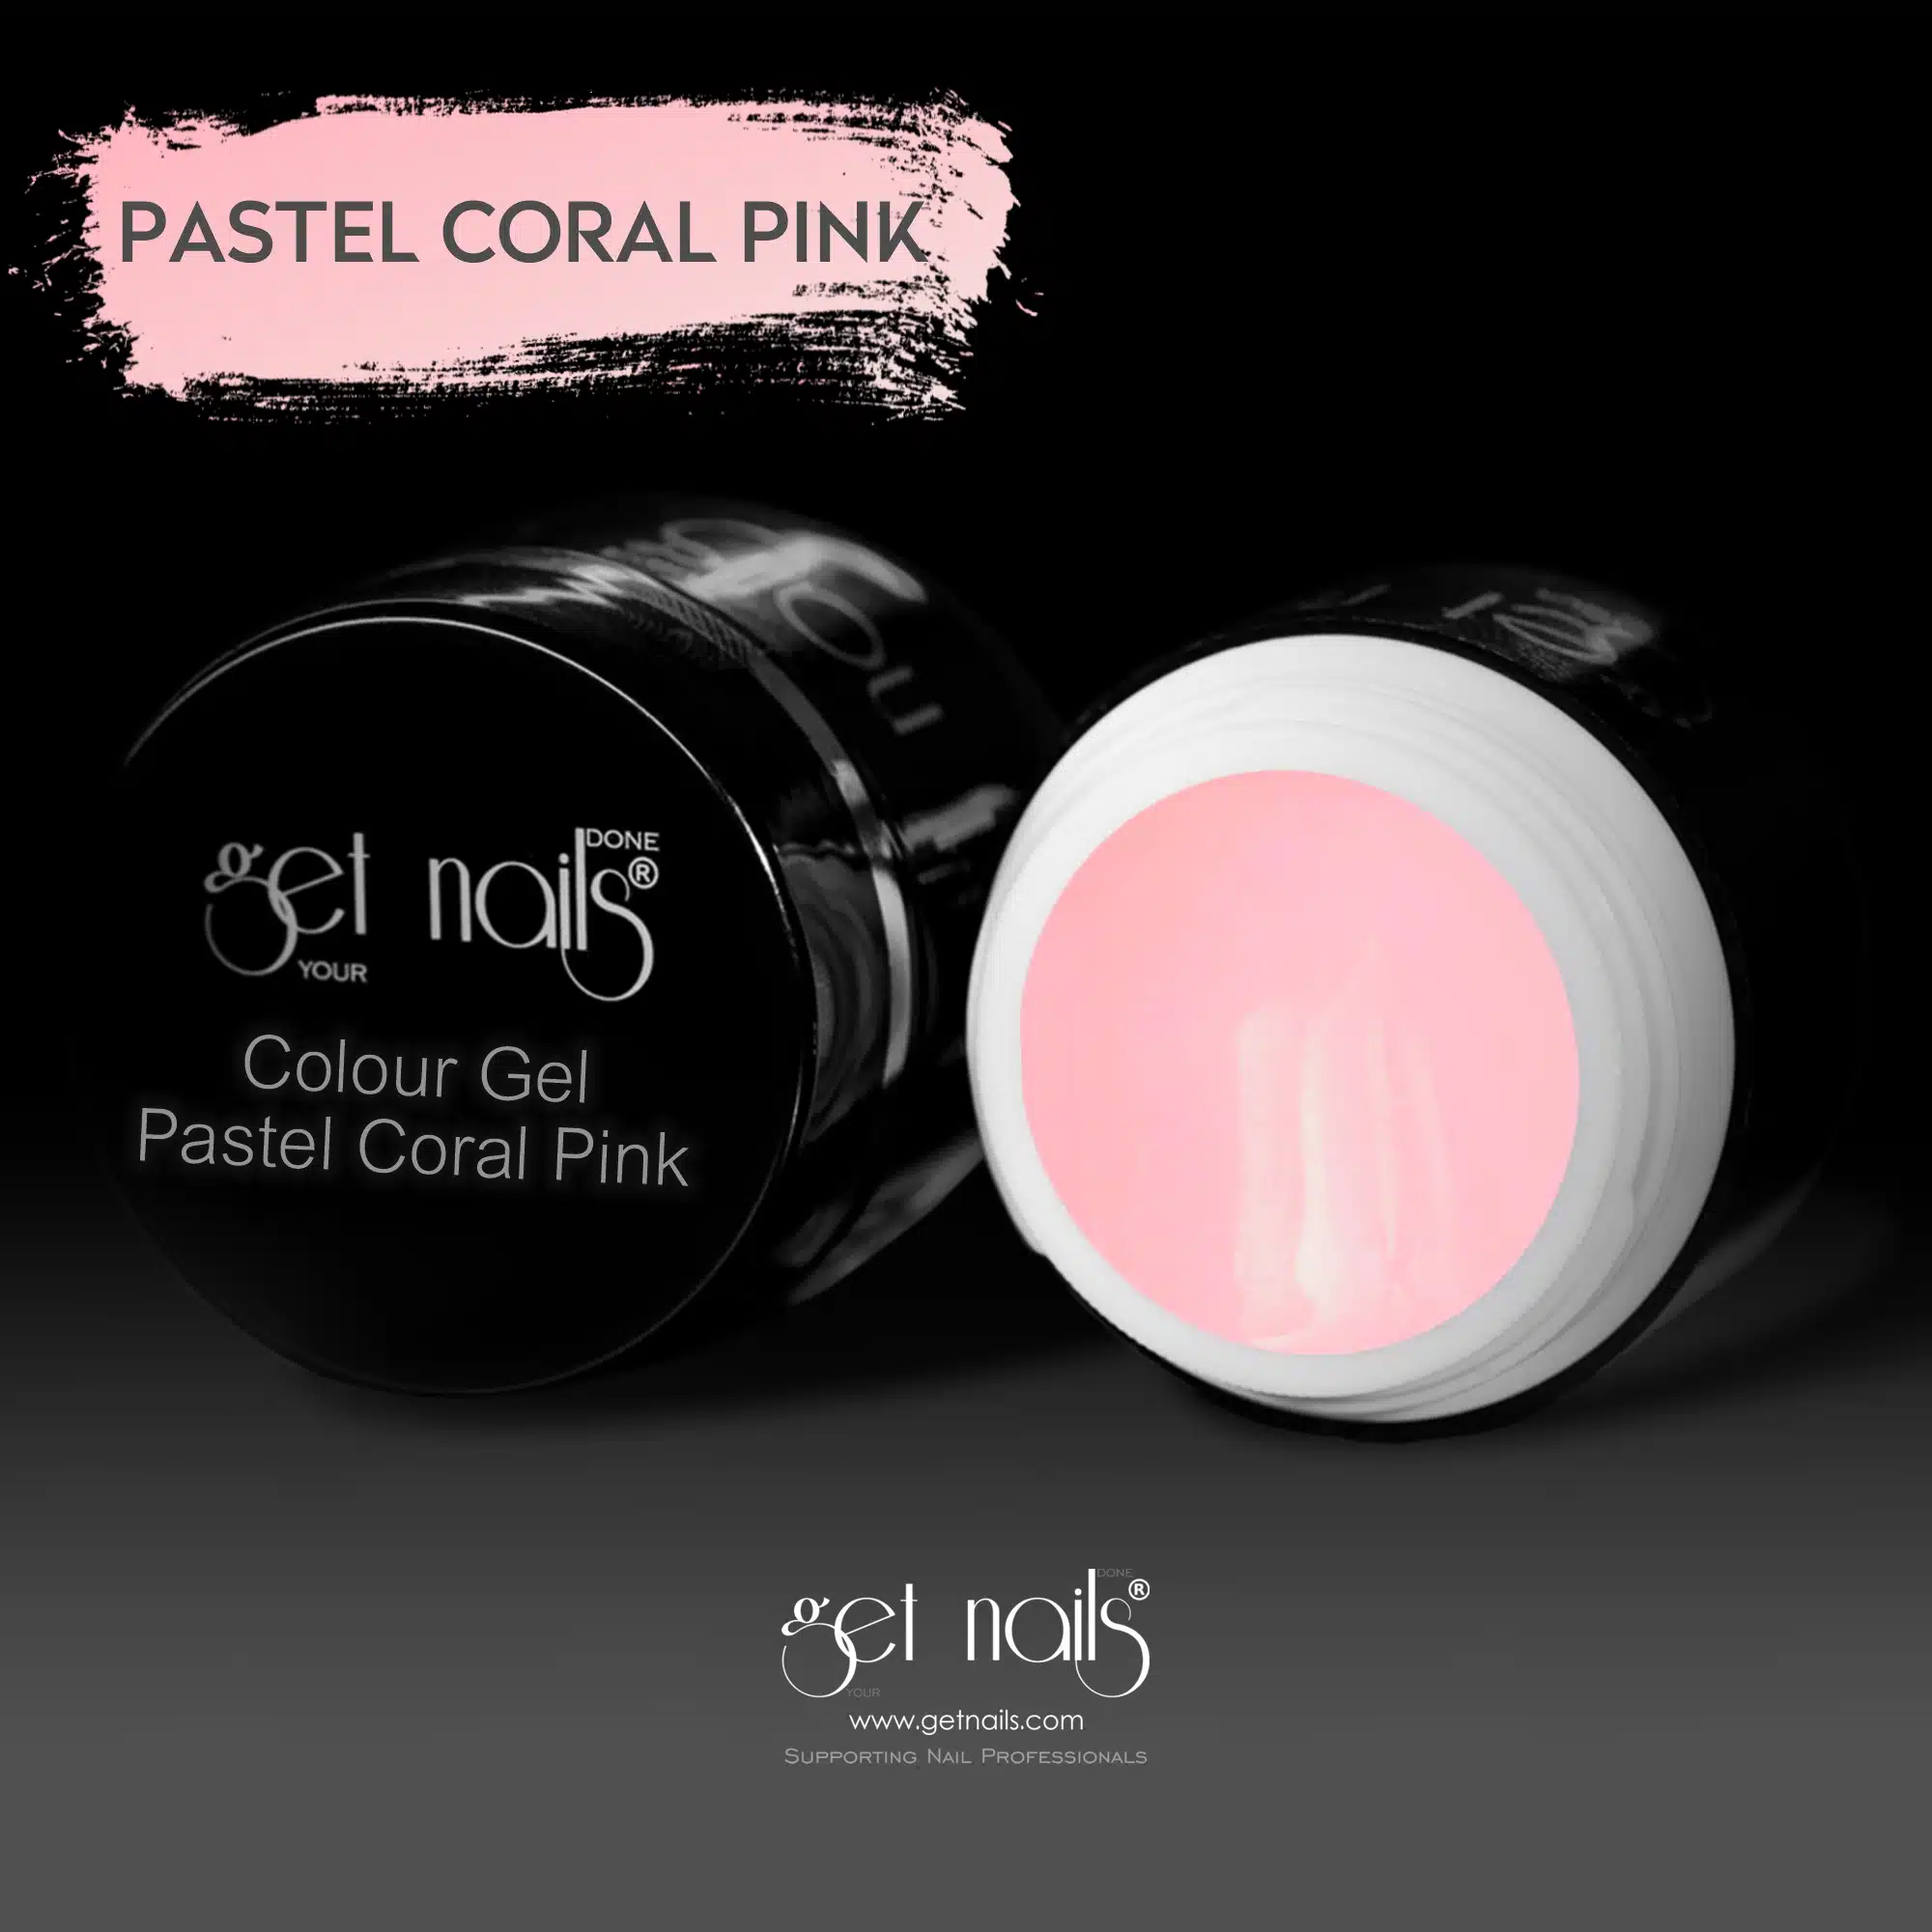 Get Nails Austria - Цветной гель Pastel Coral Pink 5g